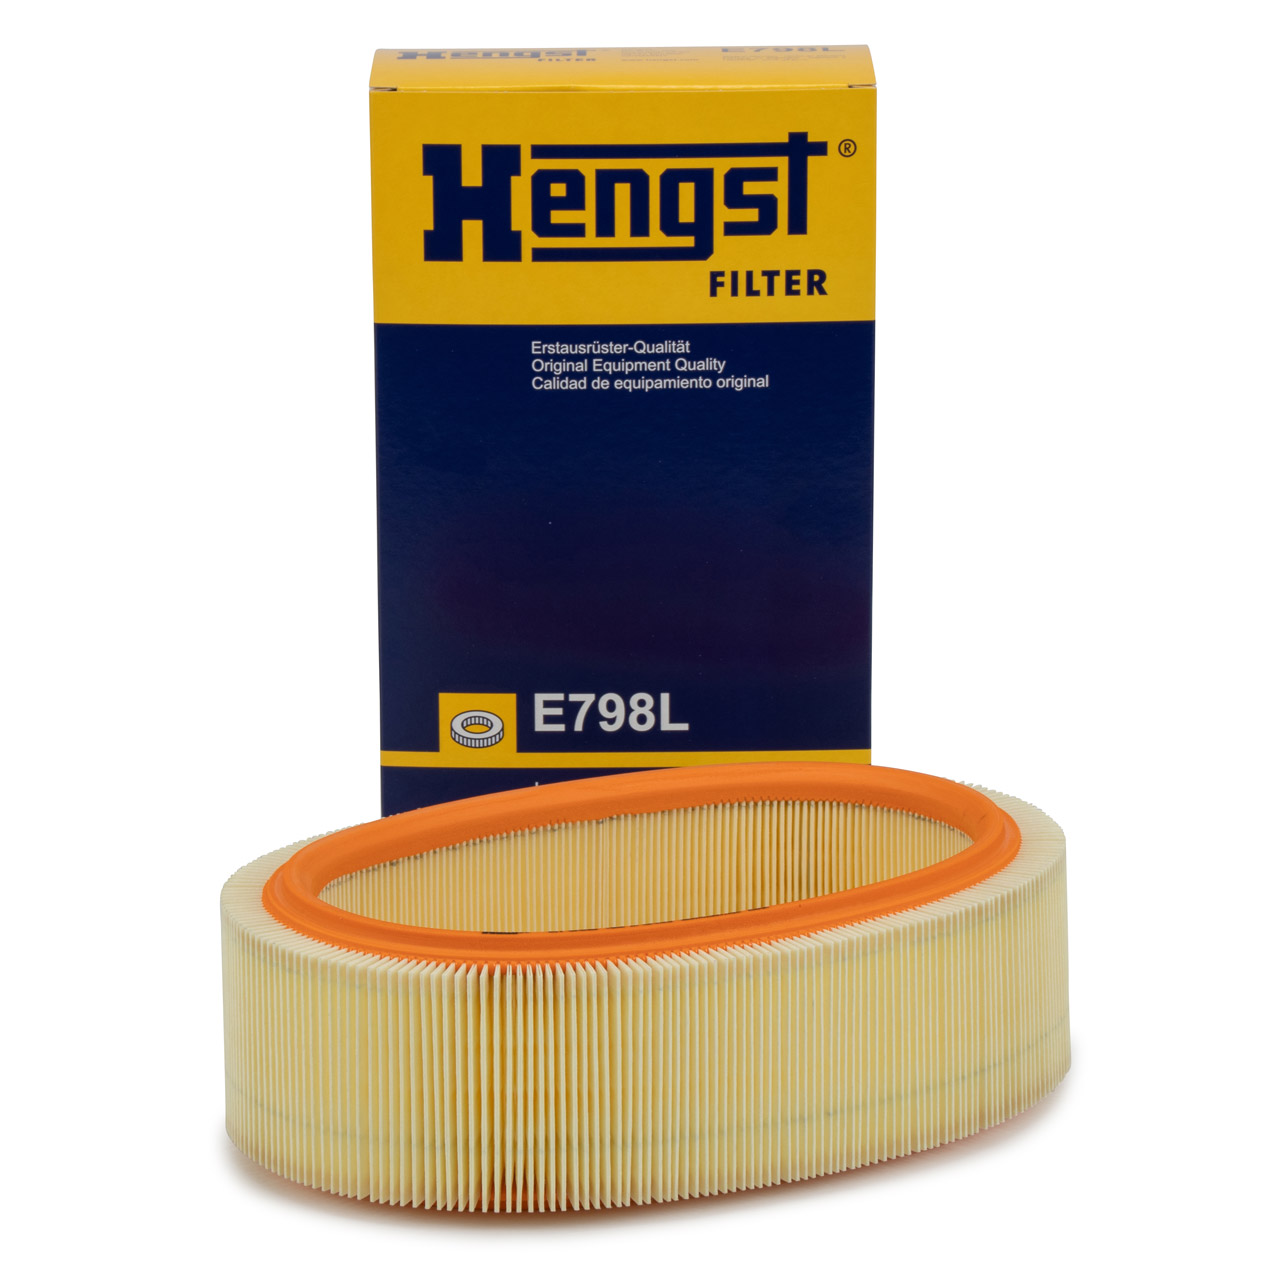 HENGST E798L Luftfilter für RENAULT CLIO II KANGOO MEGANE I THALIA I II 1.4 1.6